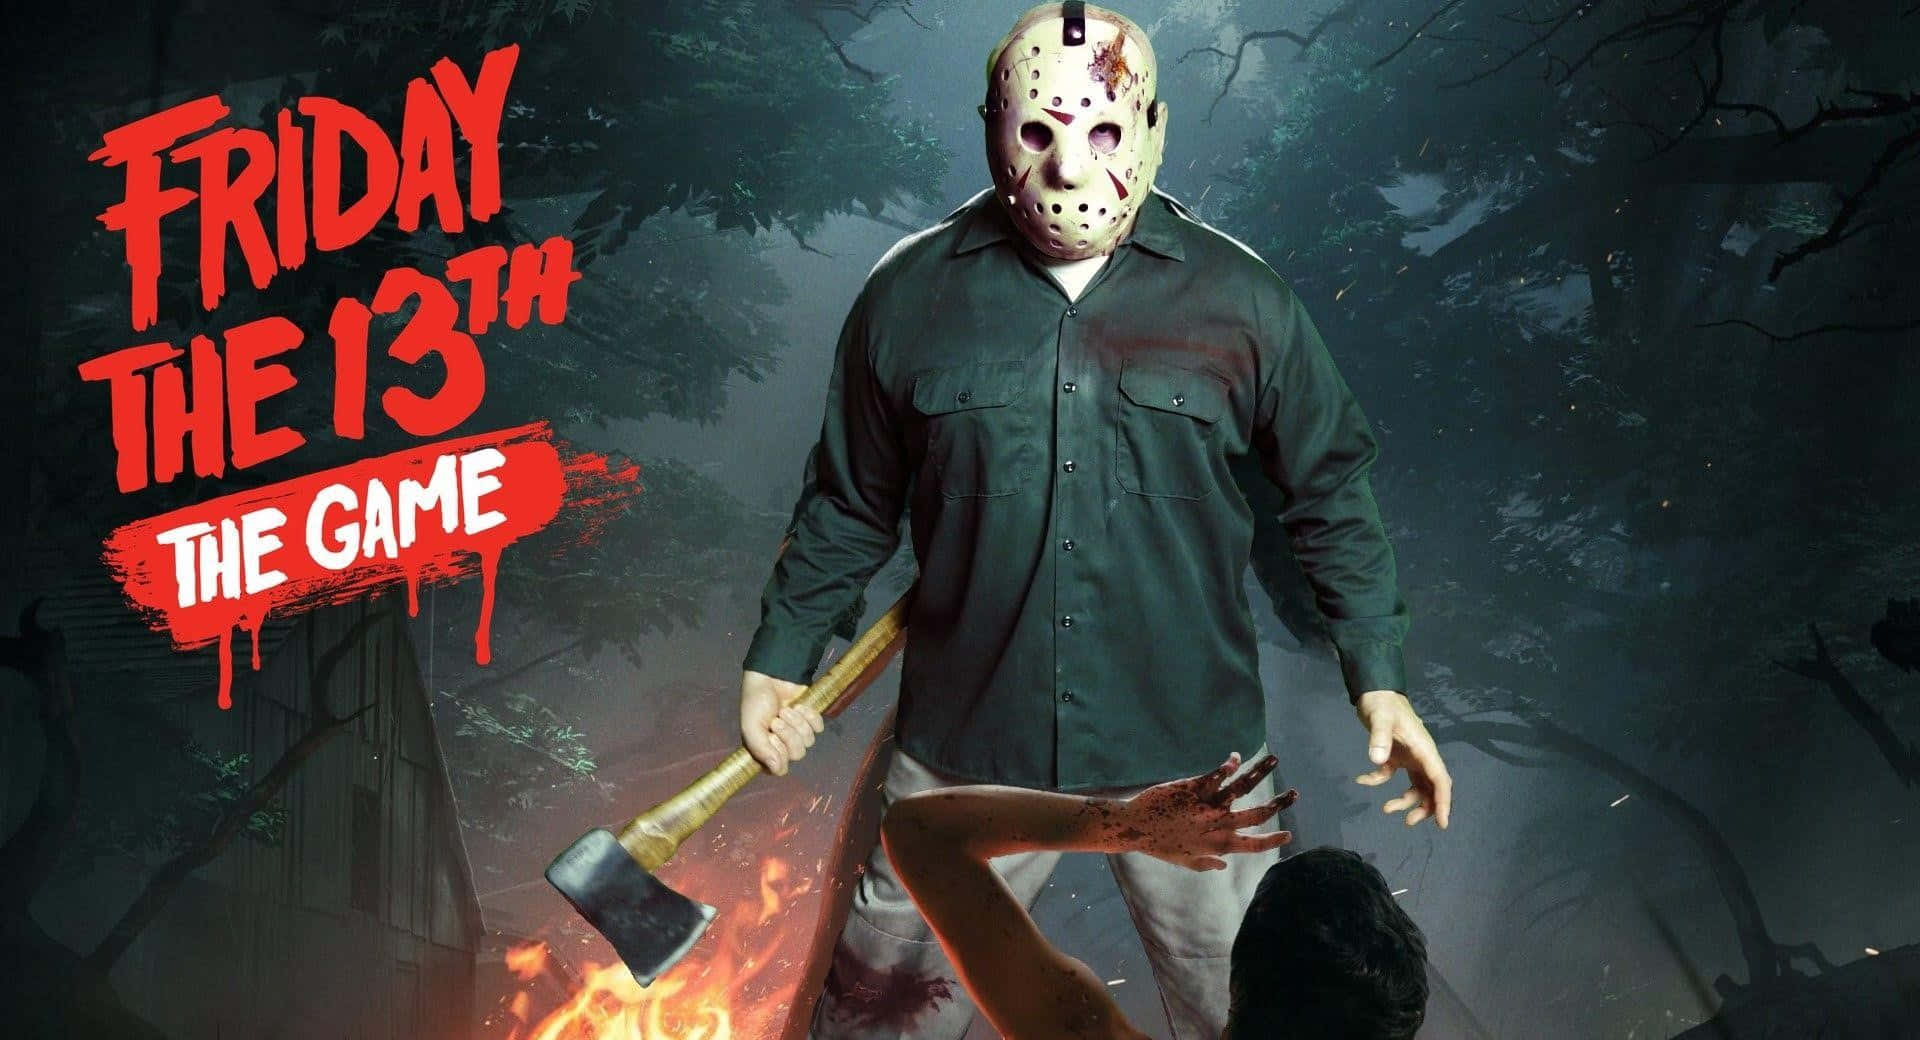 Jason Voorhees, the iconic horror movie villain